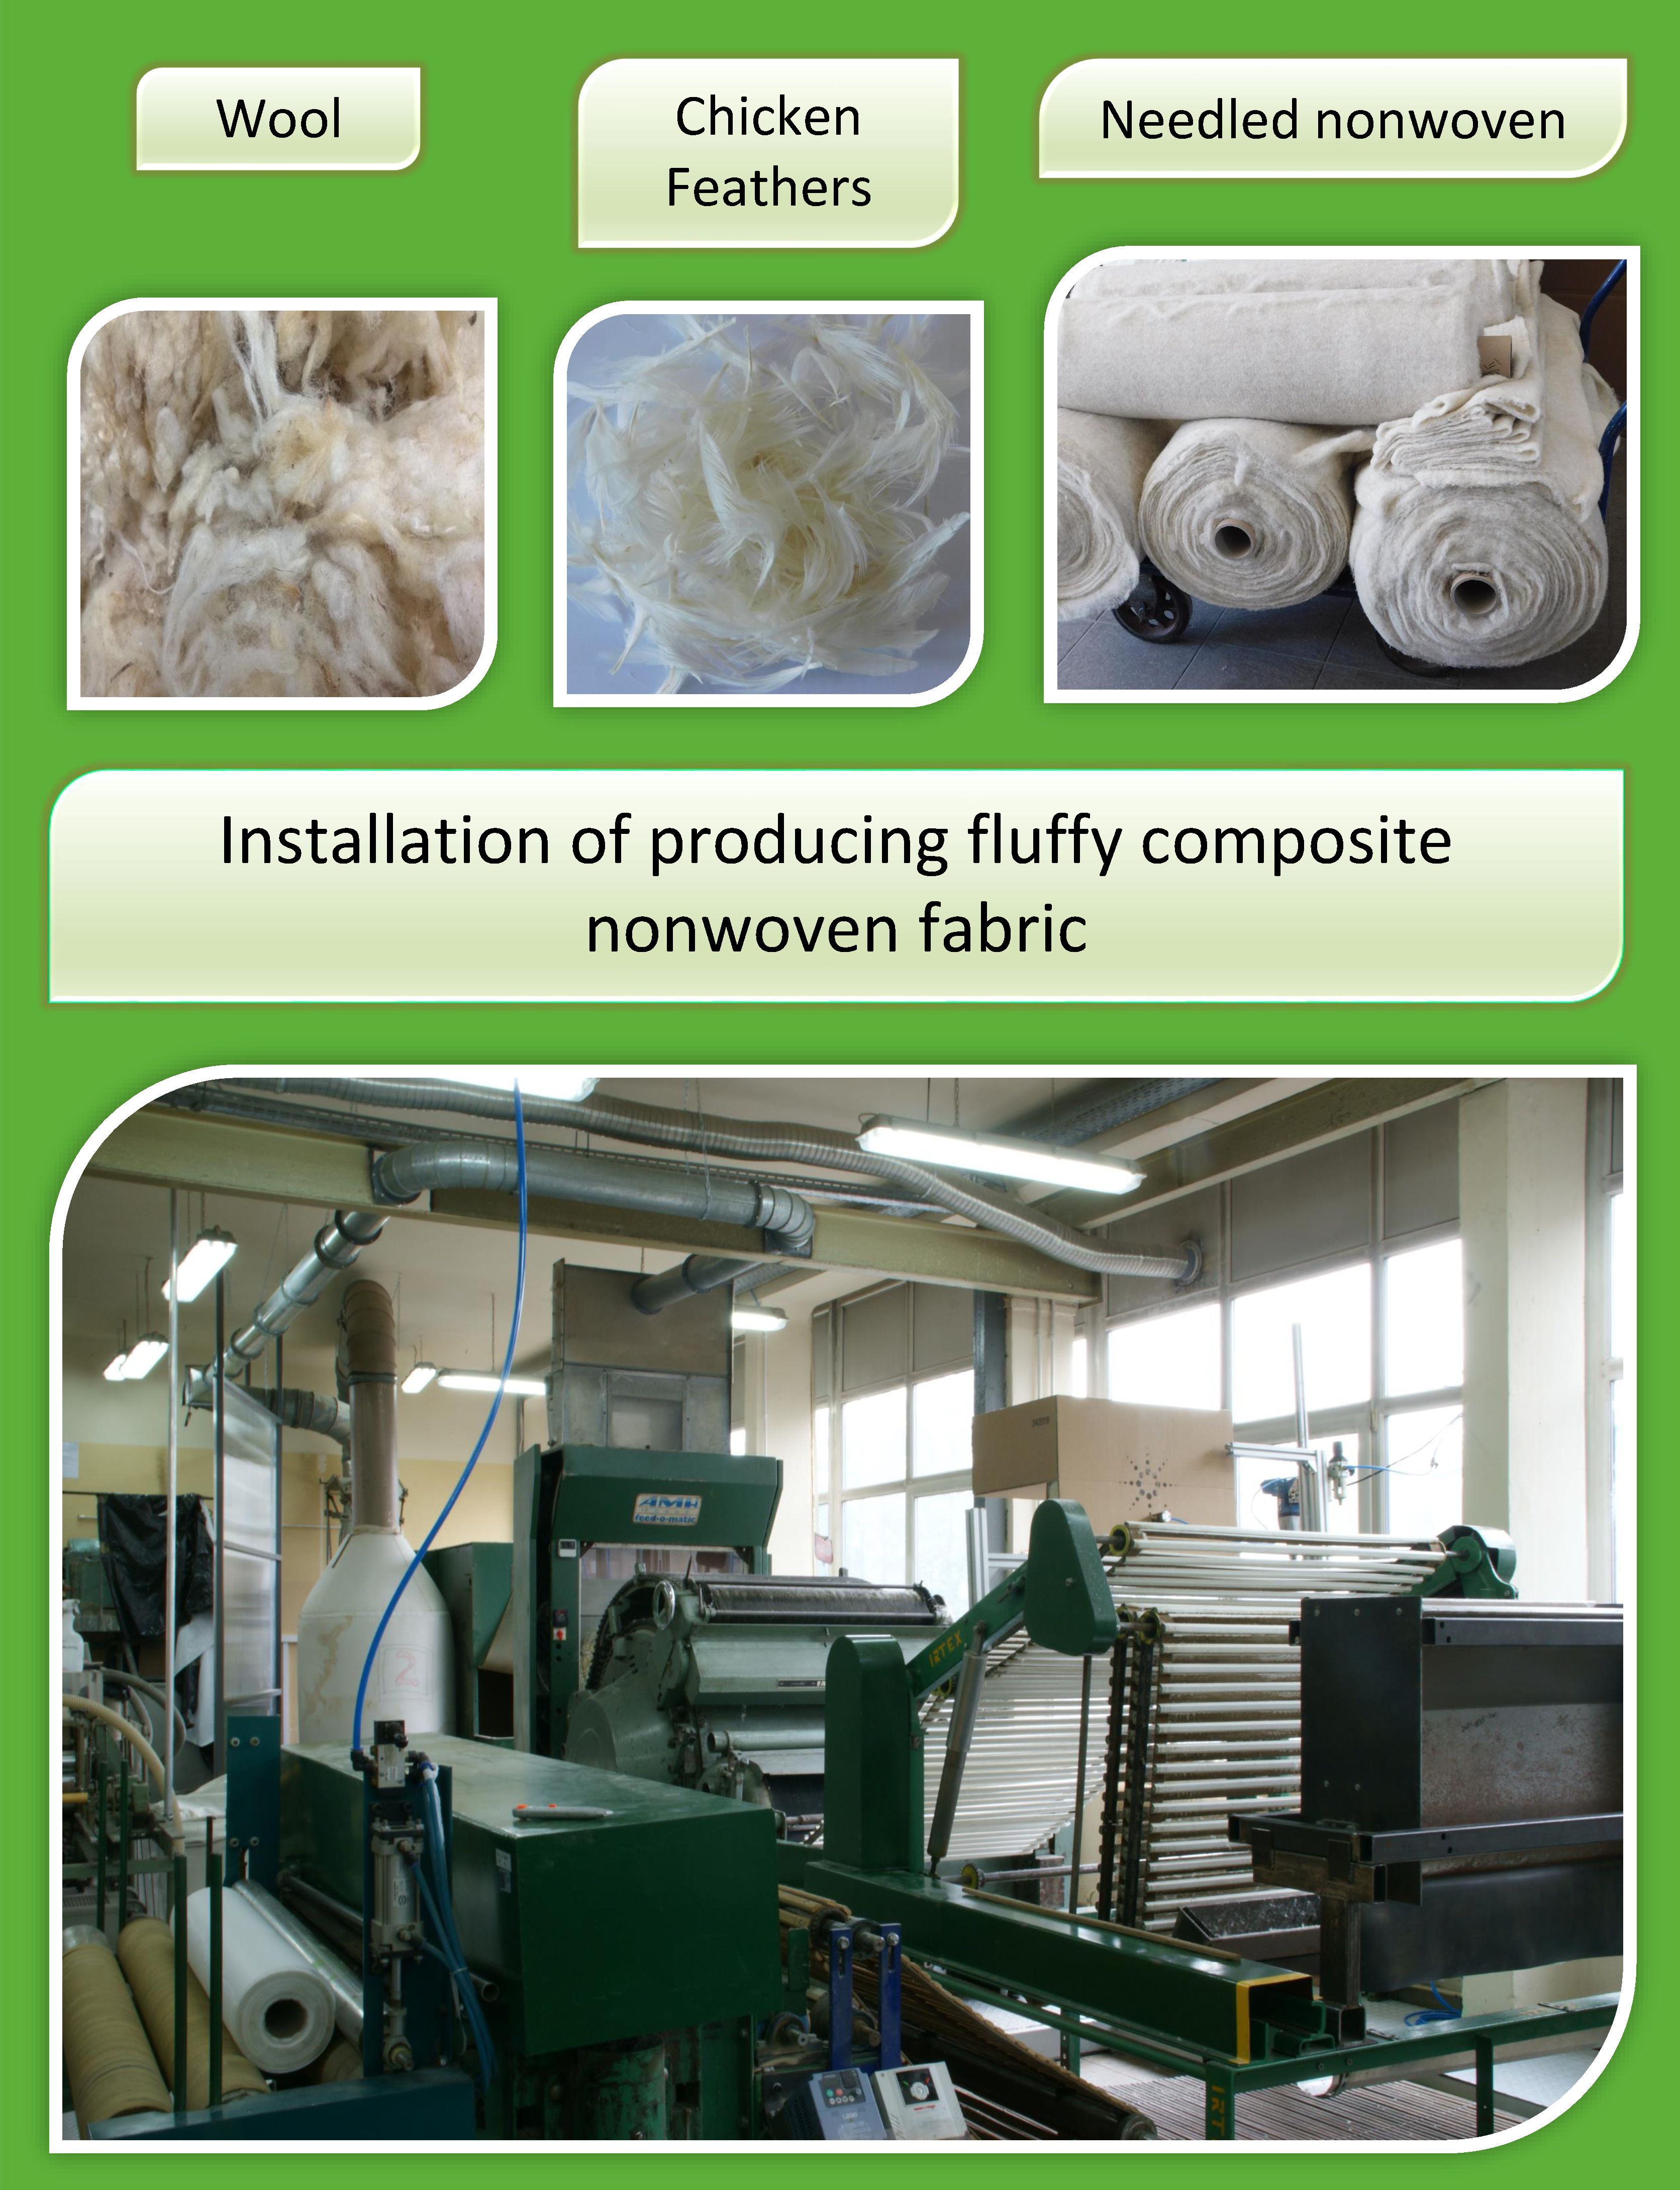 Inovativni netkani tekstil s dodatkom perja za primjenu u poljoprivredi